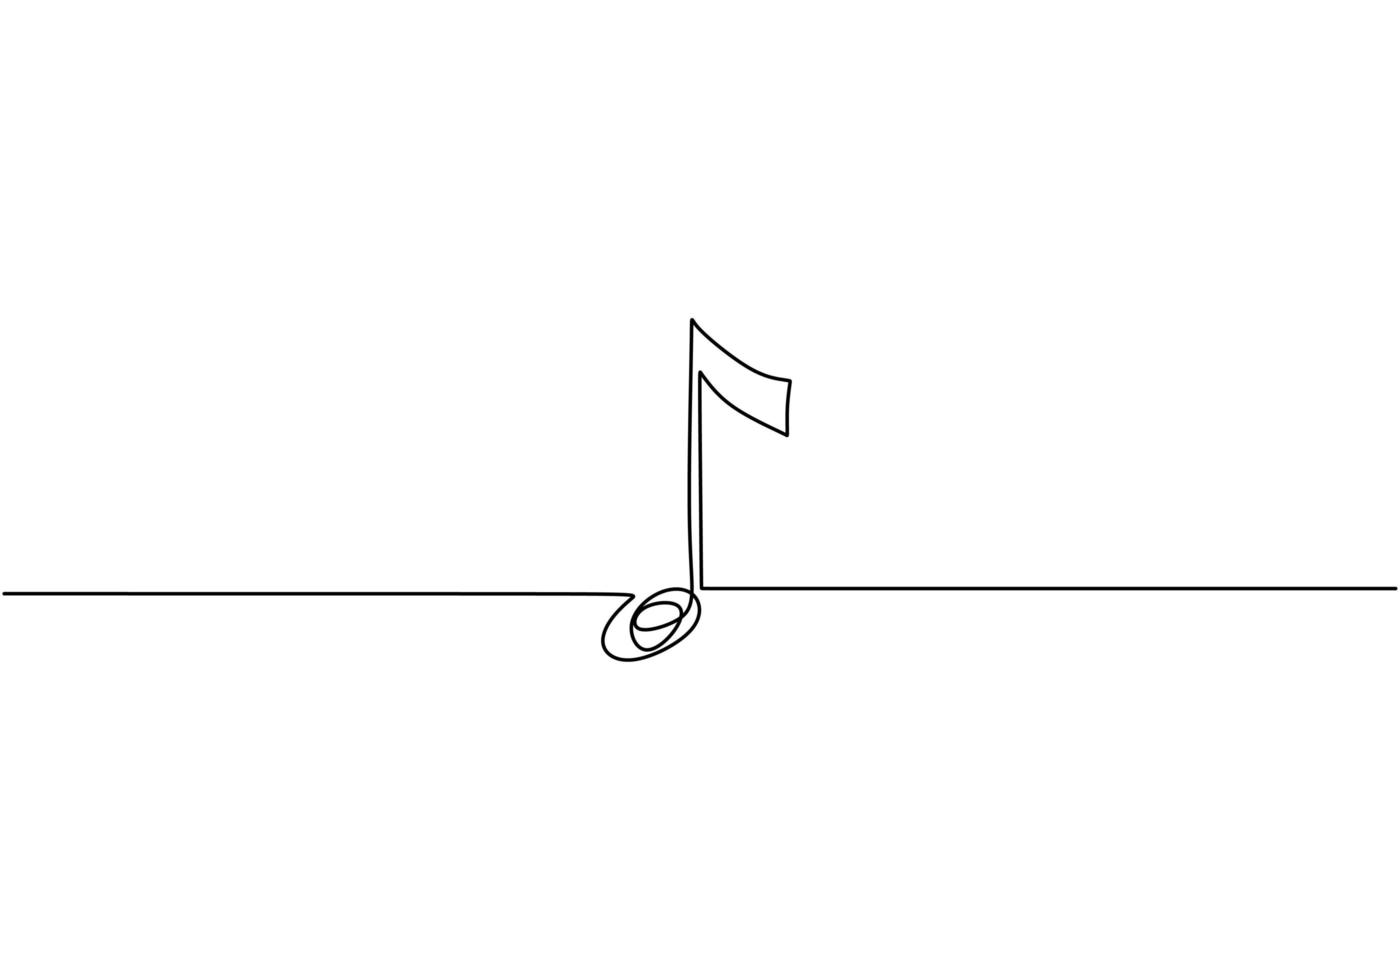 kontinuerlig en linje ritning. musik symbol vektorillustration. minimalism stil isolerad på vit bakgrund. vektor